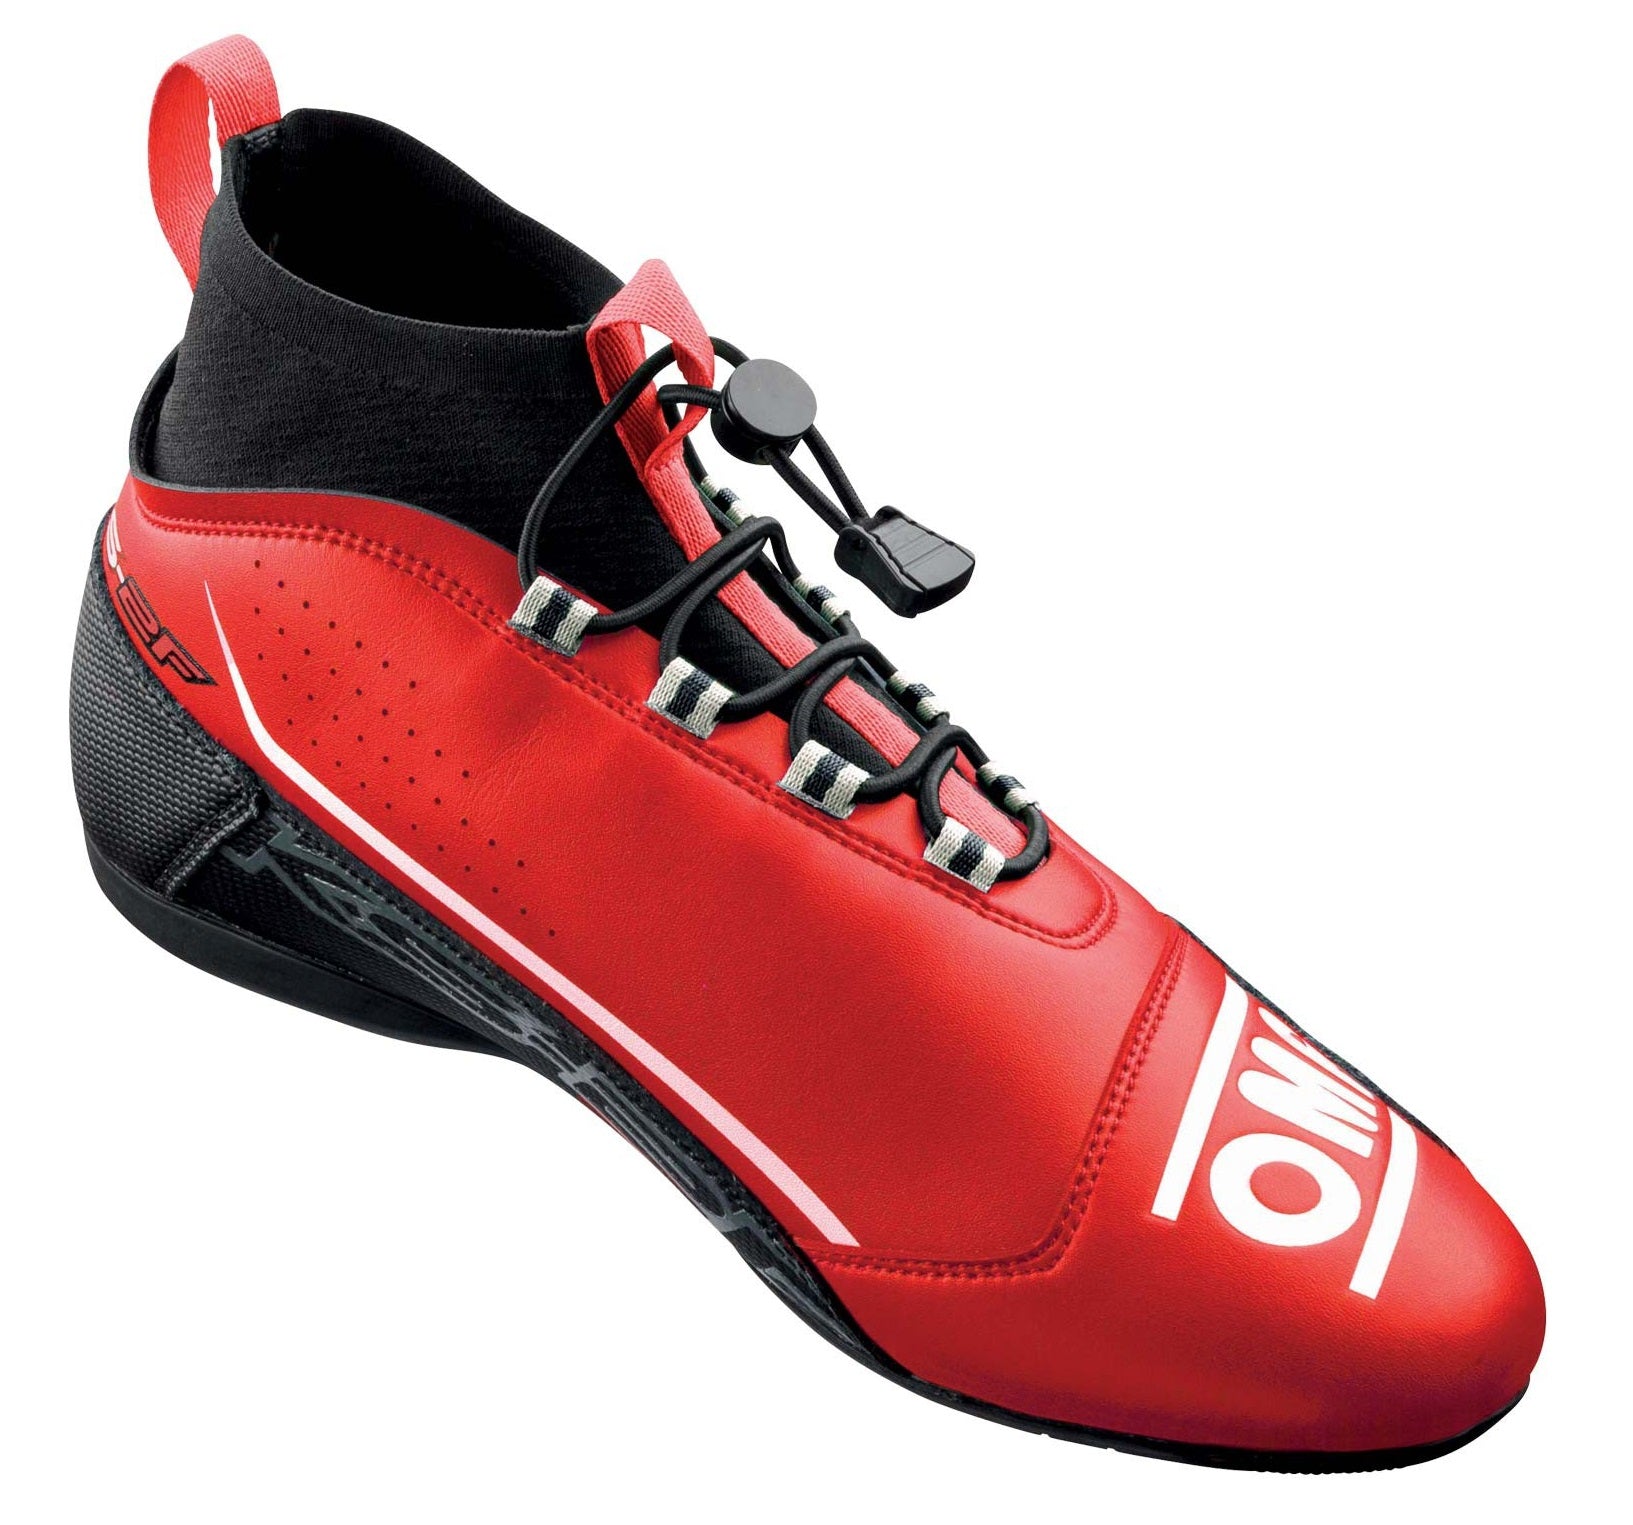 OMP KC0-0830-A01-060-37 KS-2F Karting shoes, red/black, size 37 Photo-1 